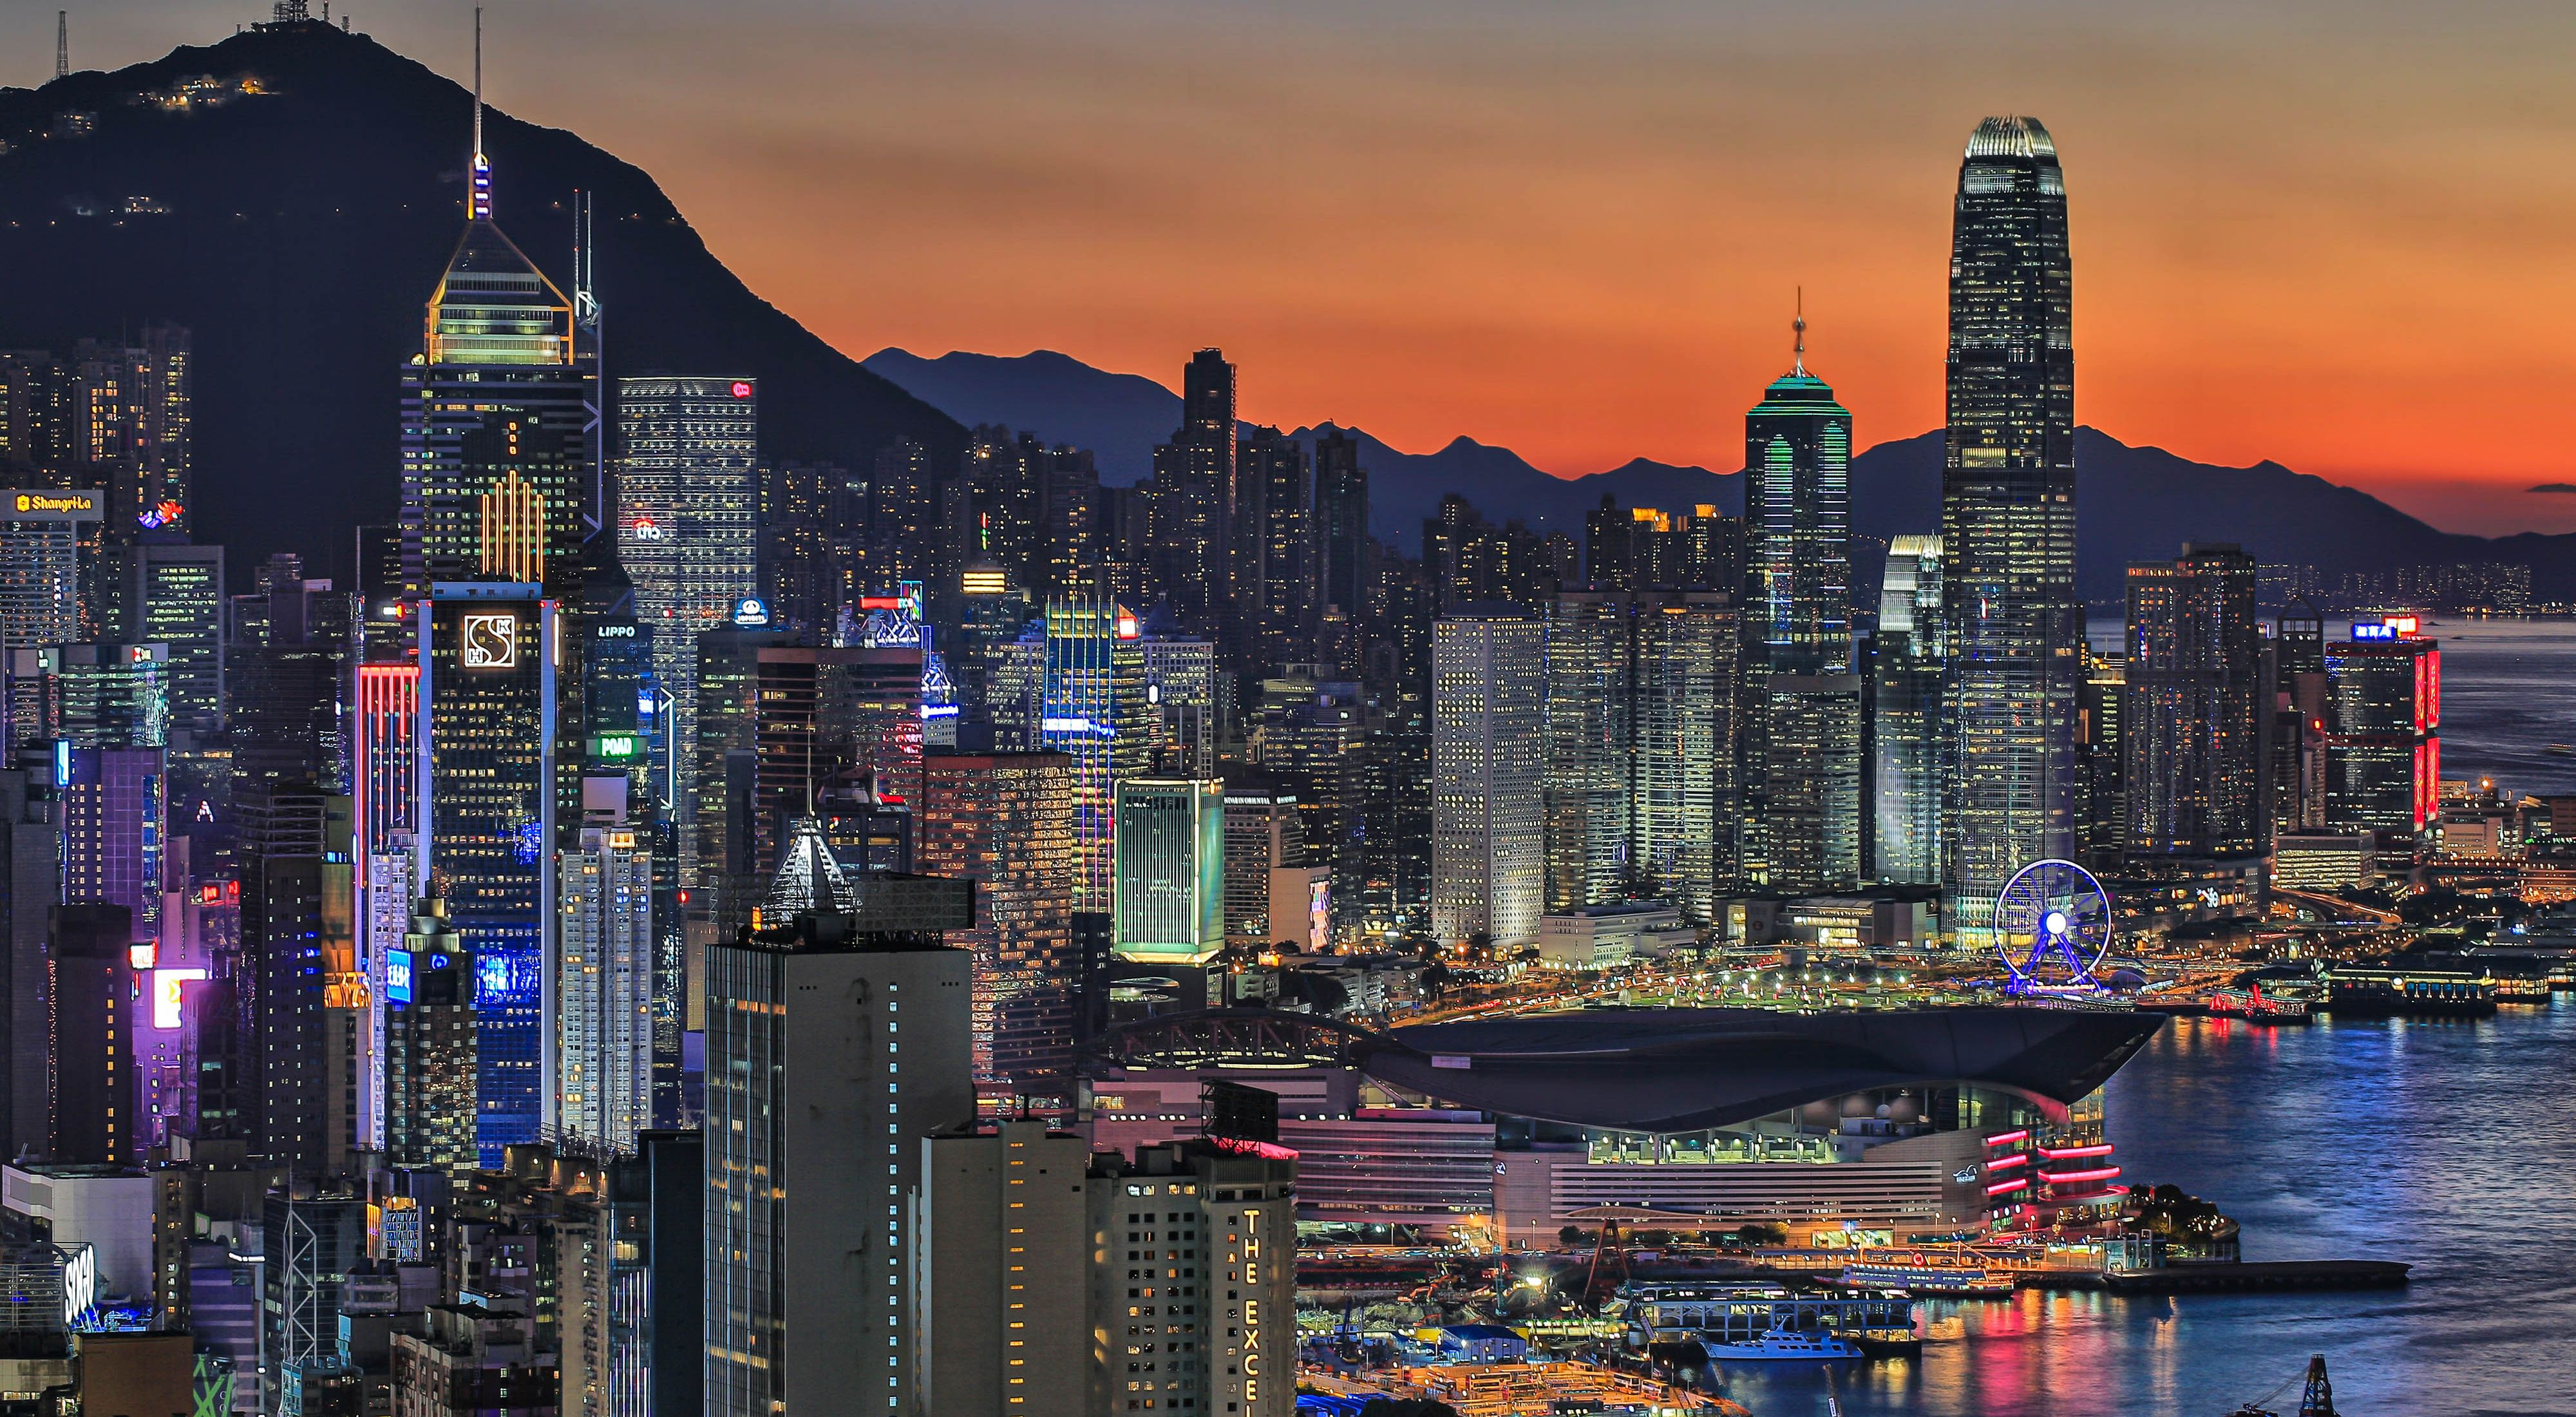 Hong Kong is a metropolitan city with beautiful night scenery.